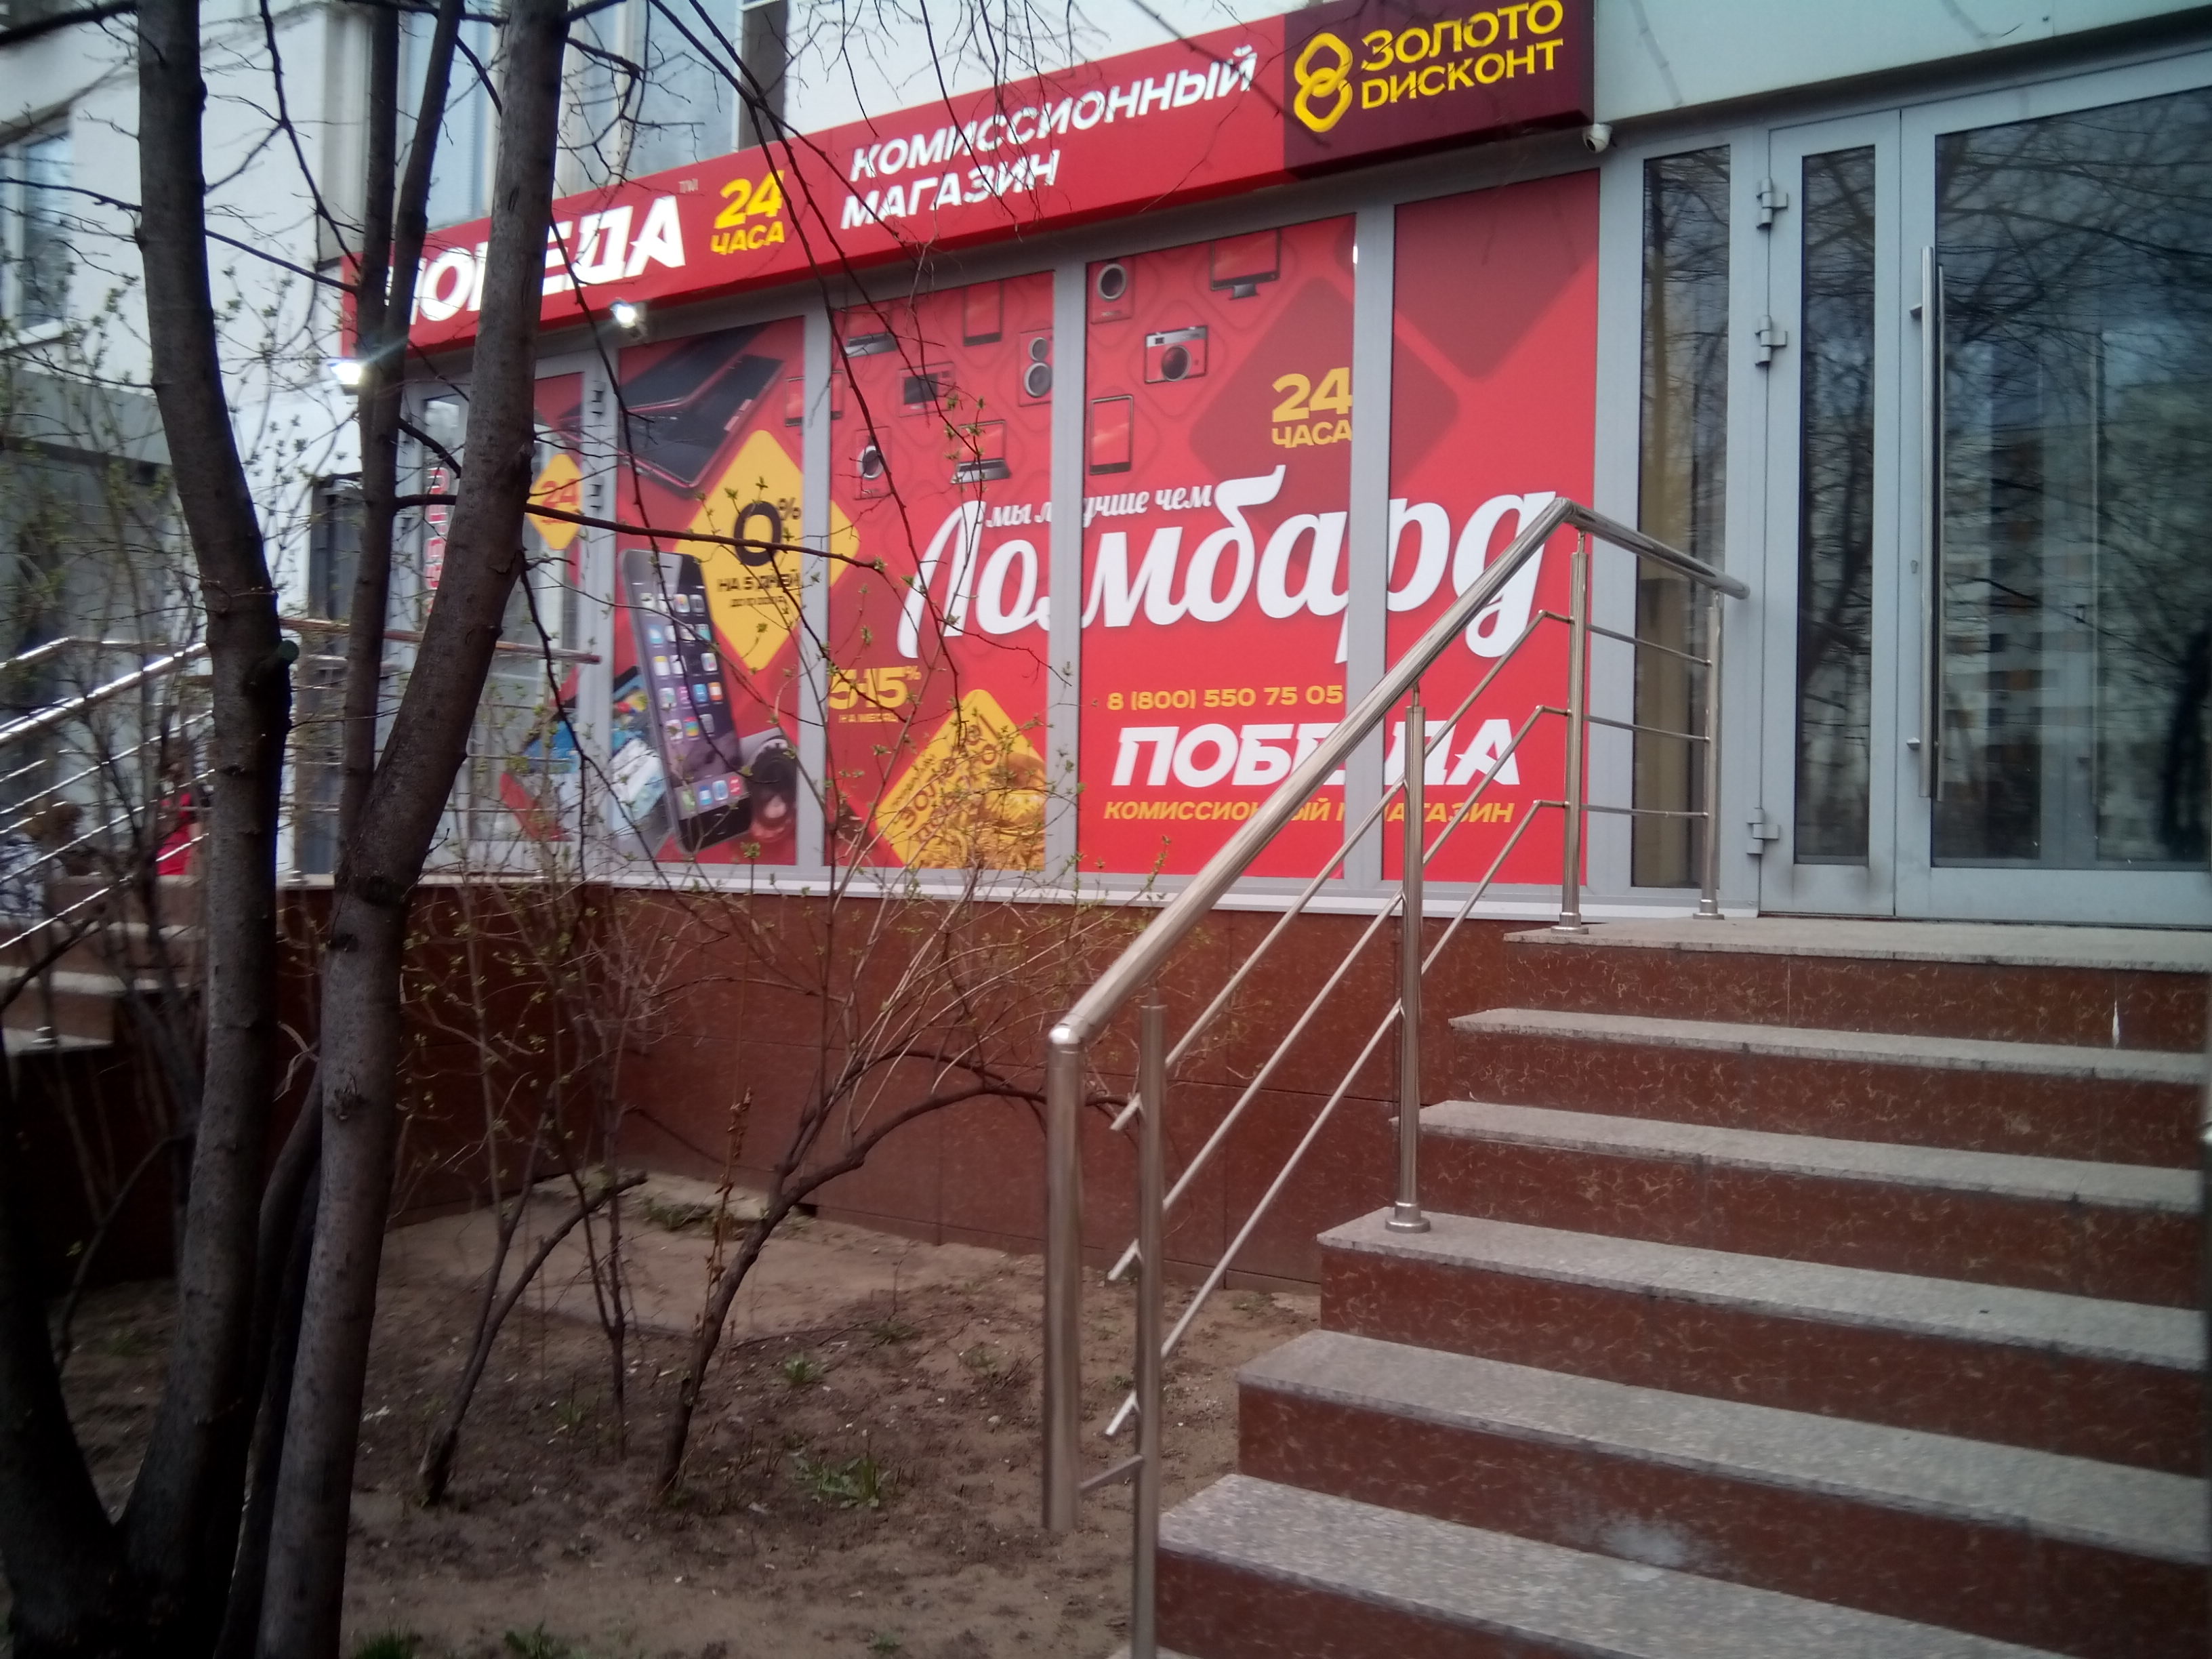 Победа Комиссионный Магазин Москва